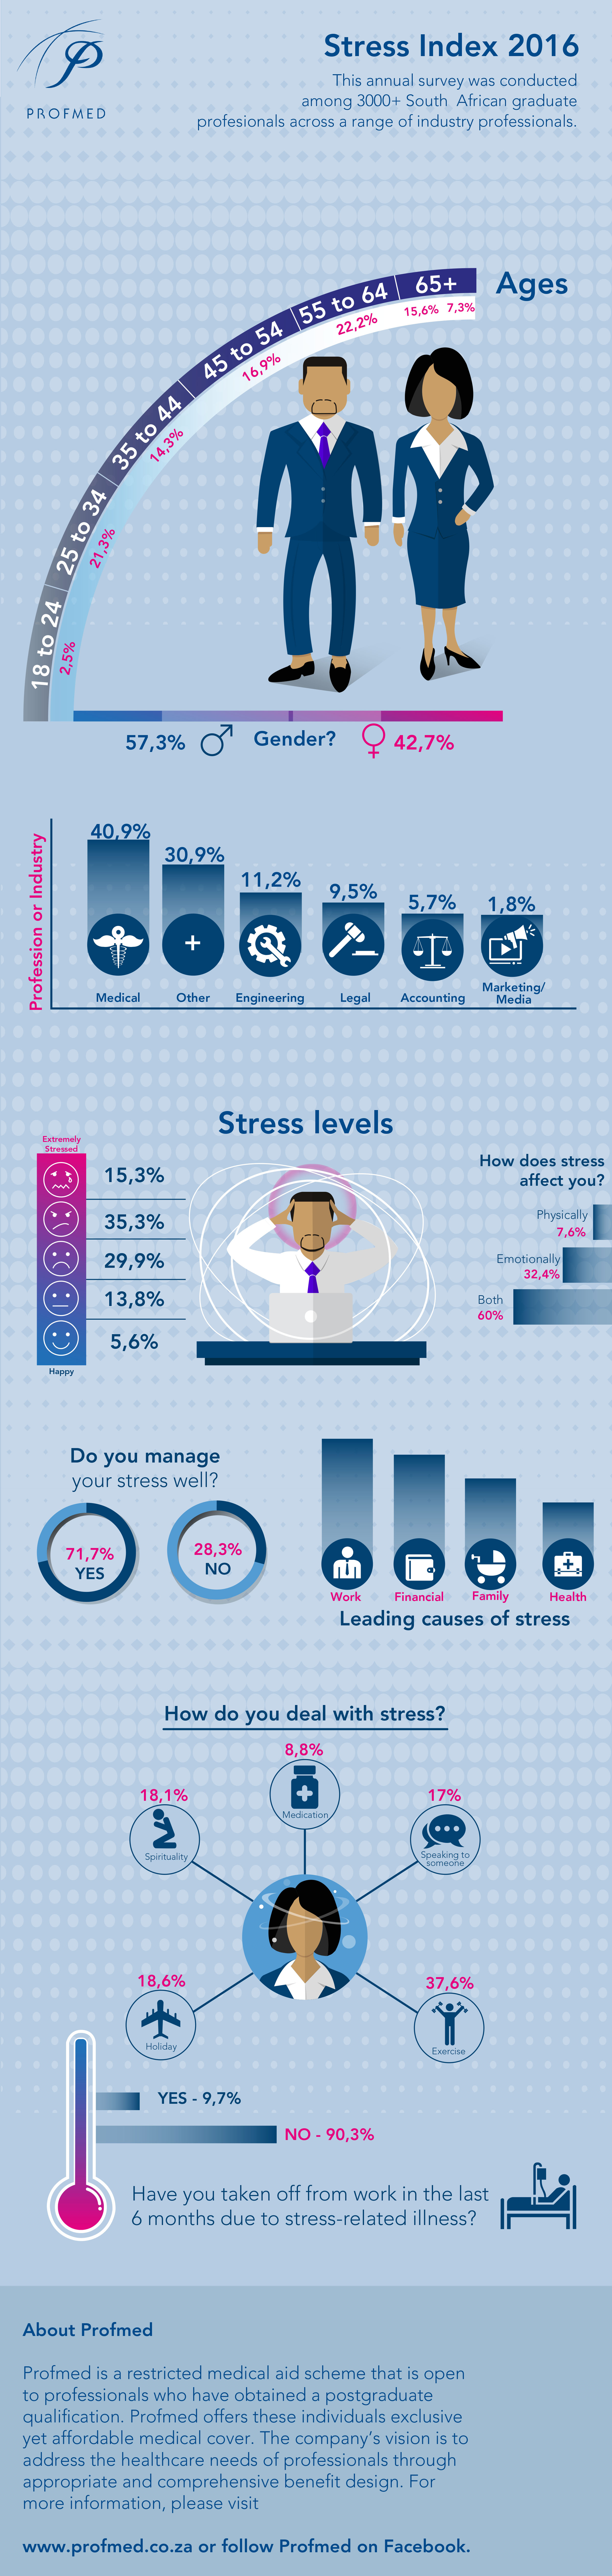 Profmed-stress-management-Infographic2016